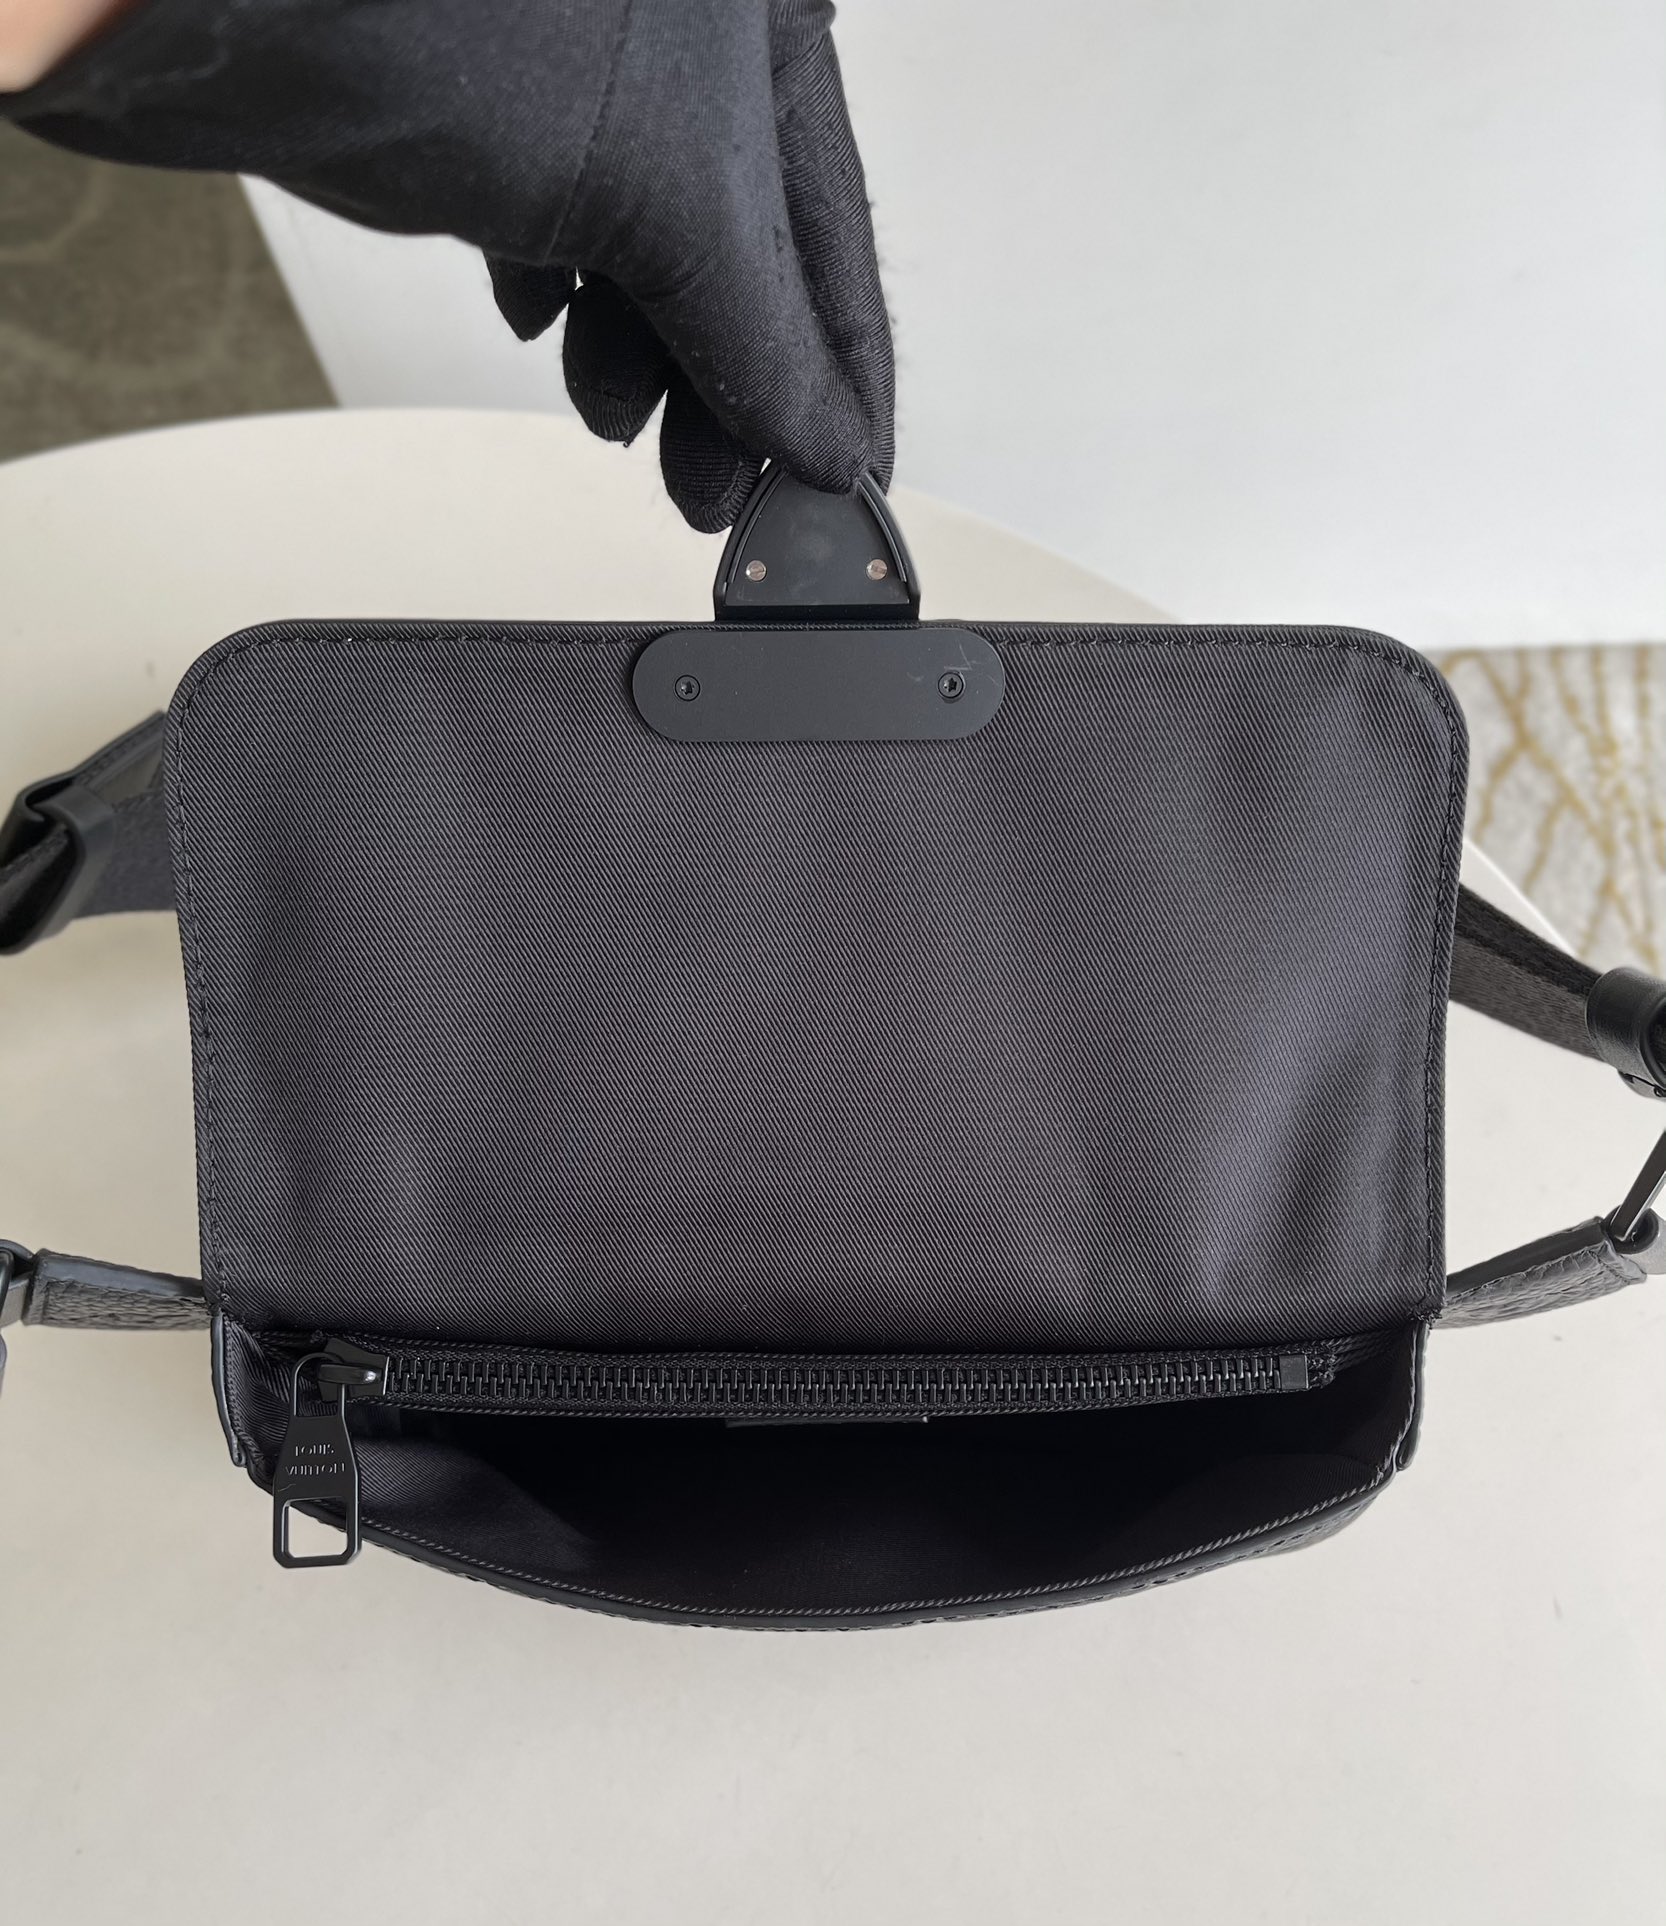 Shop Louis Vuitton DAMIER S Lock Sling Bag (M58487) by MilanSelect